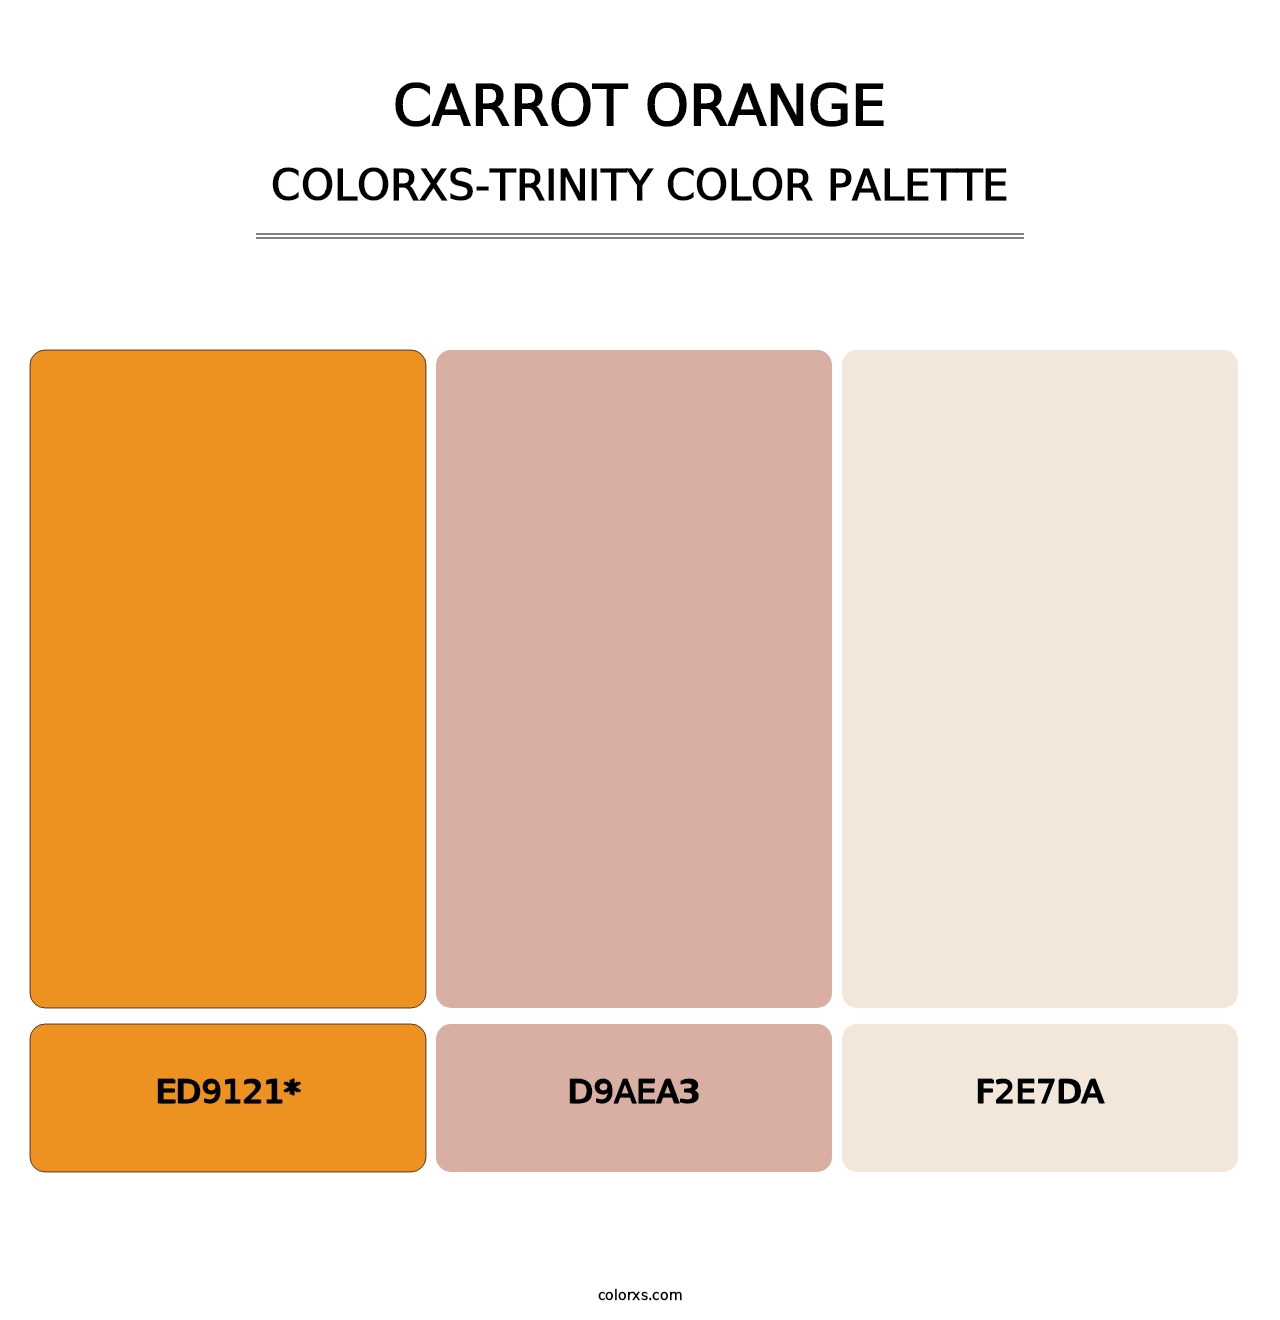 Carrot Orange - Colorxs Trinity Palette